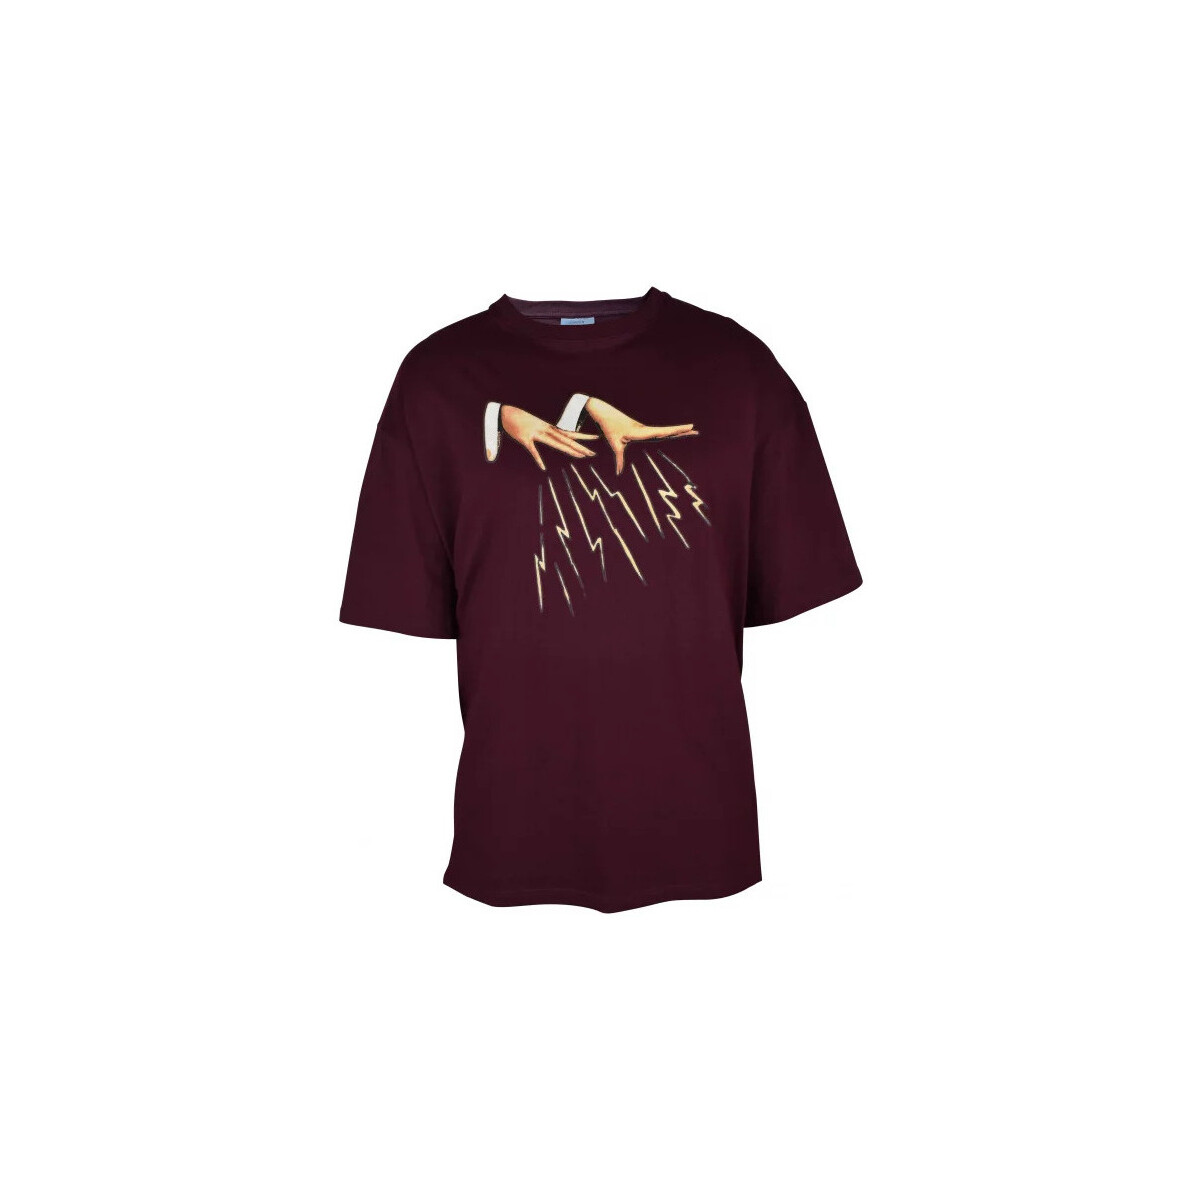 Kleidung Herren T-Shirts & Poloshirts Lanvin  Bordeaux